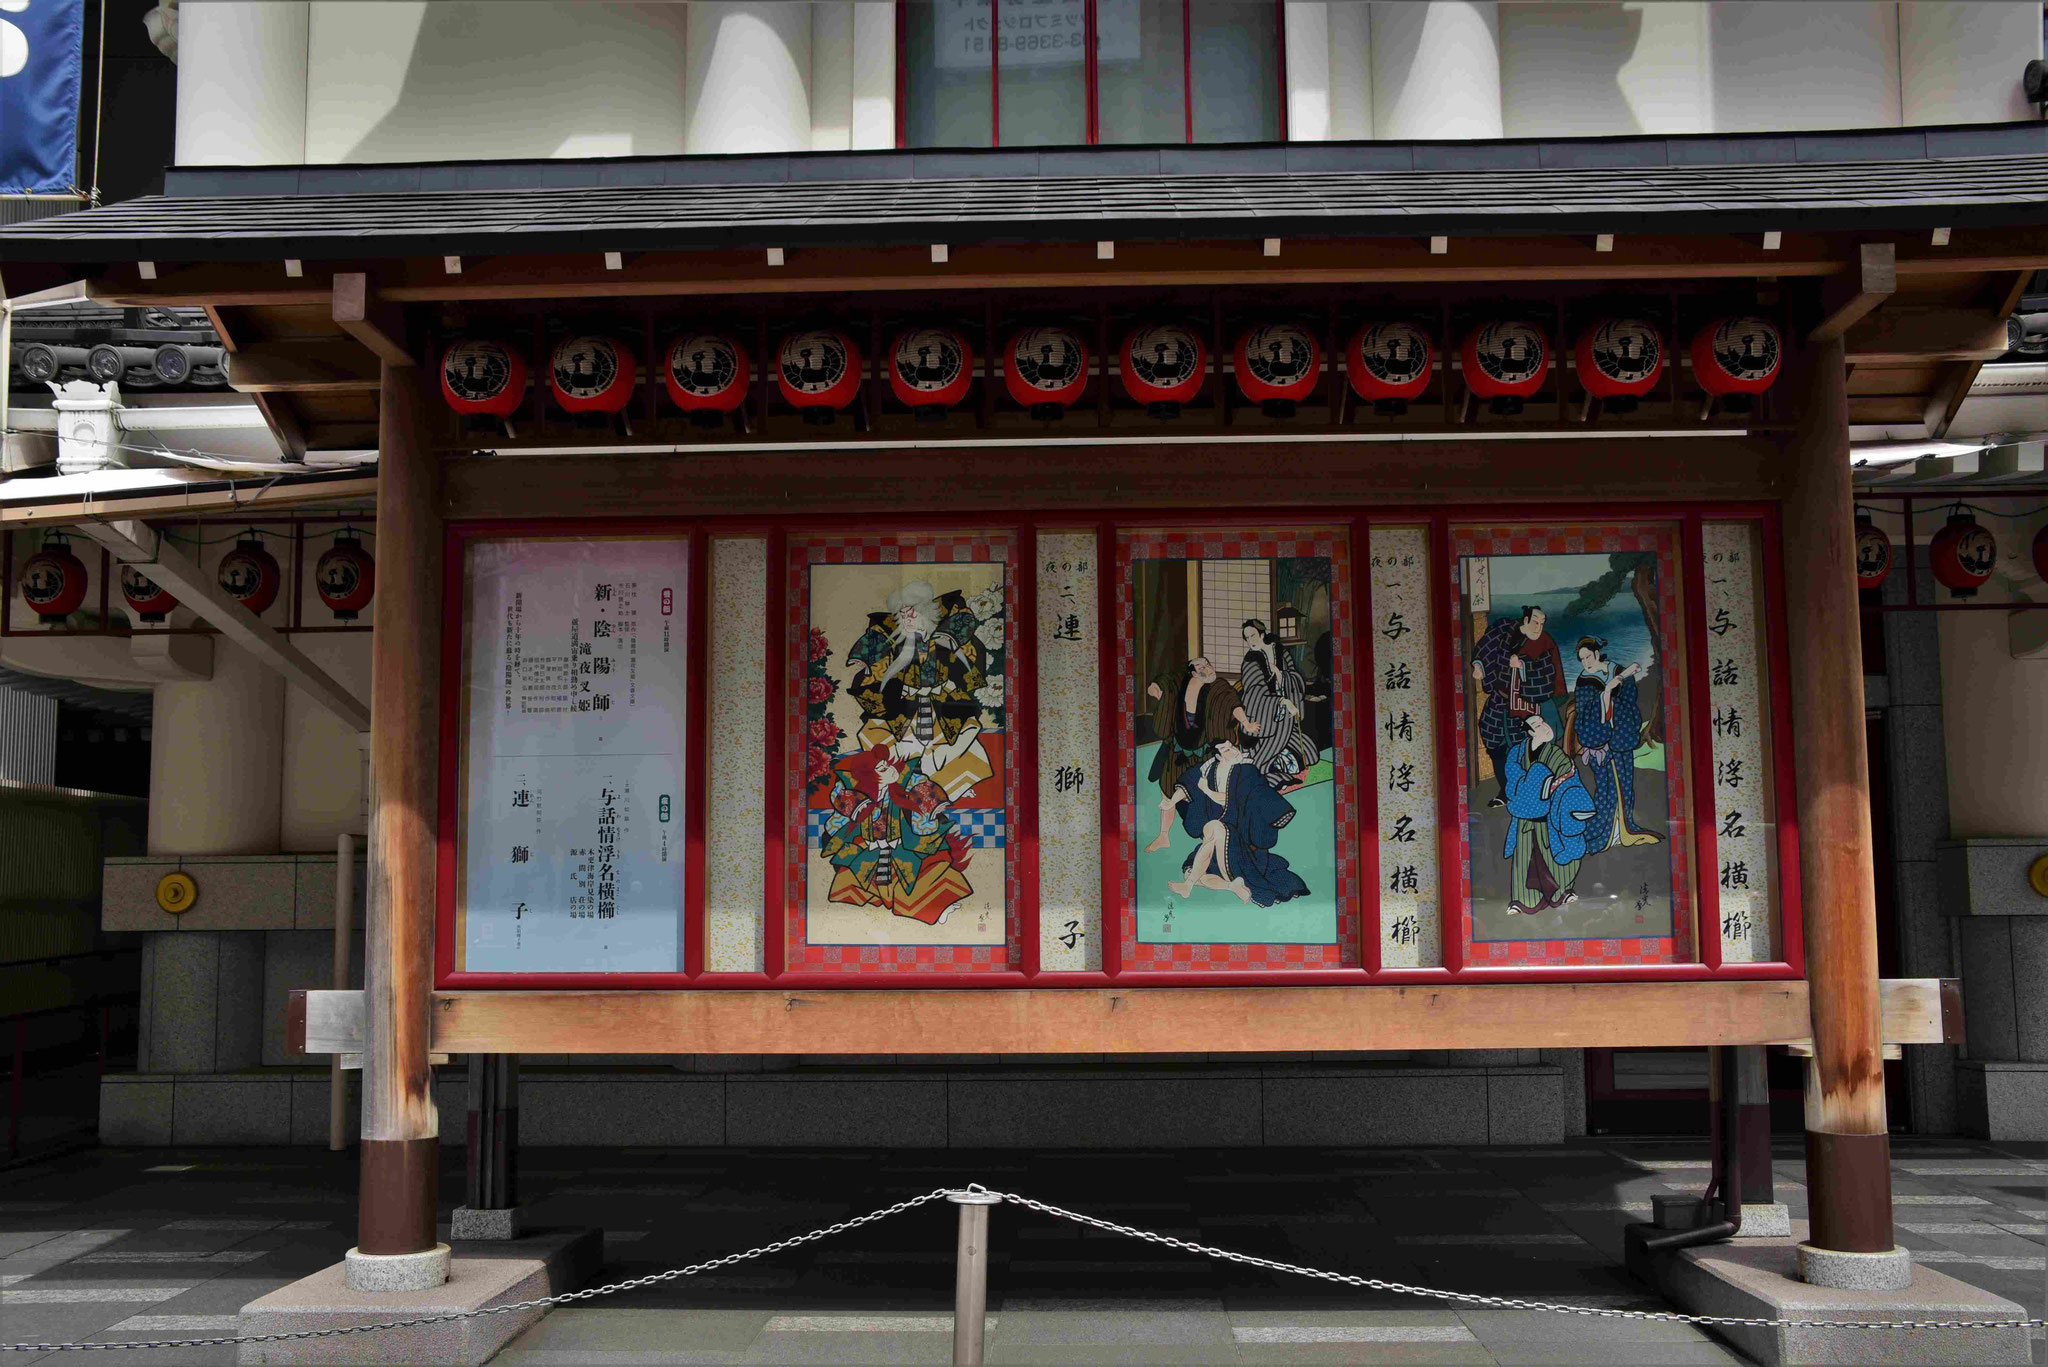 Werbung am Kabuki-Theater II